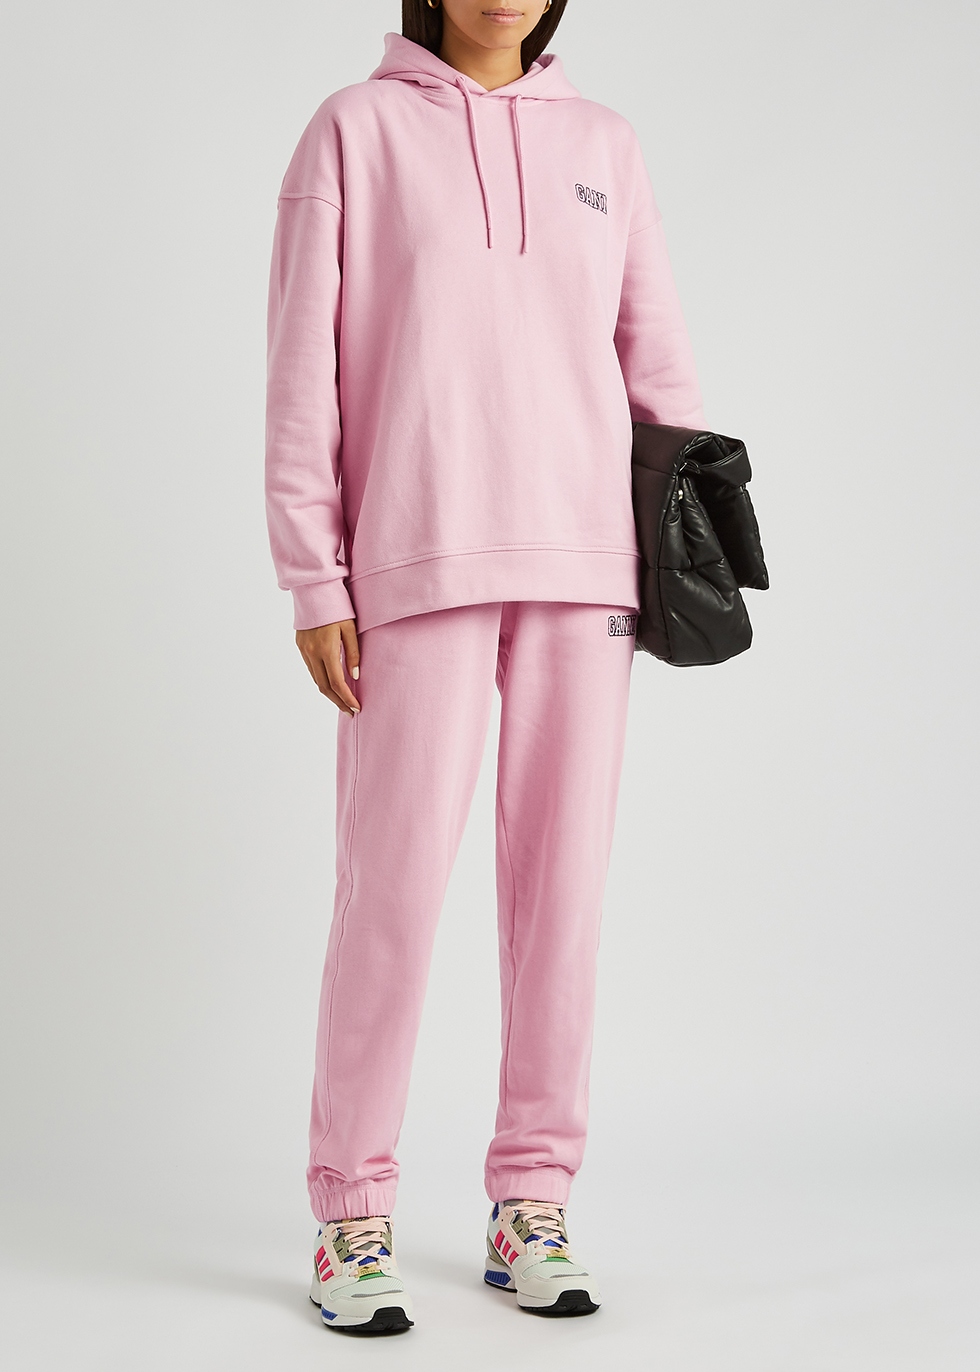 Ganni Software Isoli pink jersey sweatpants - Harvey Nichols